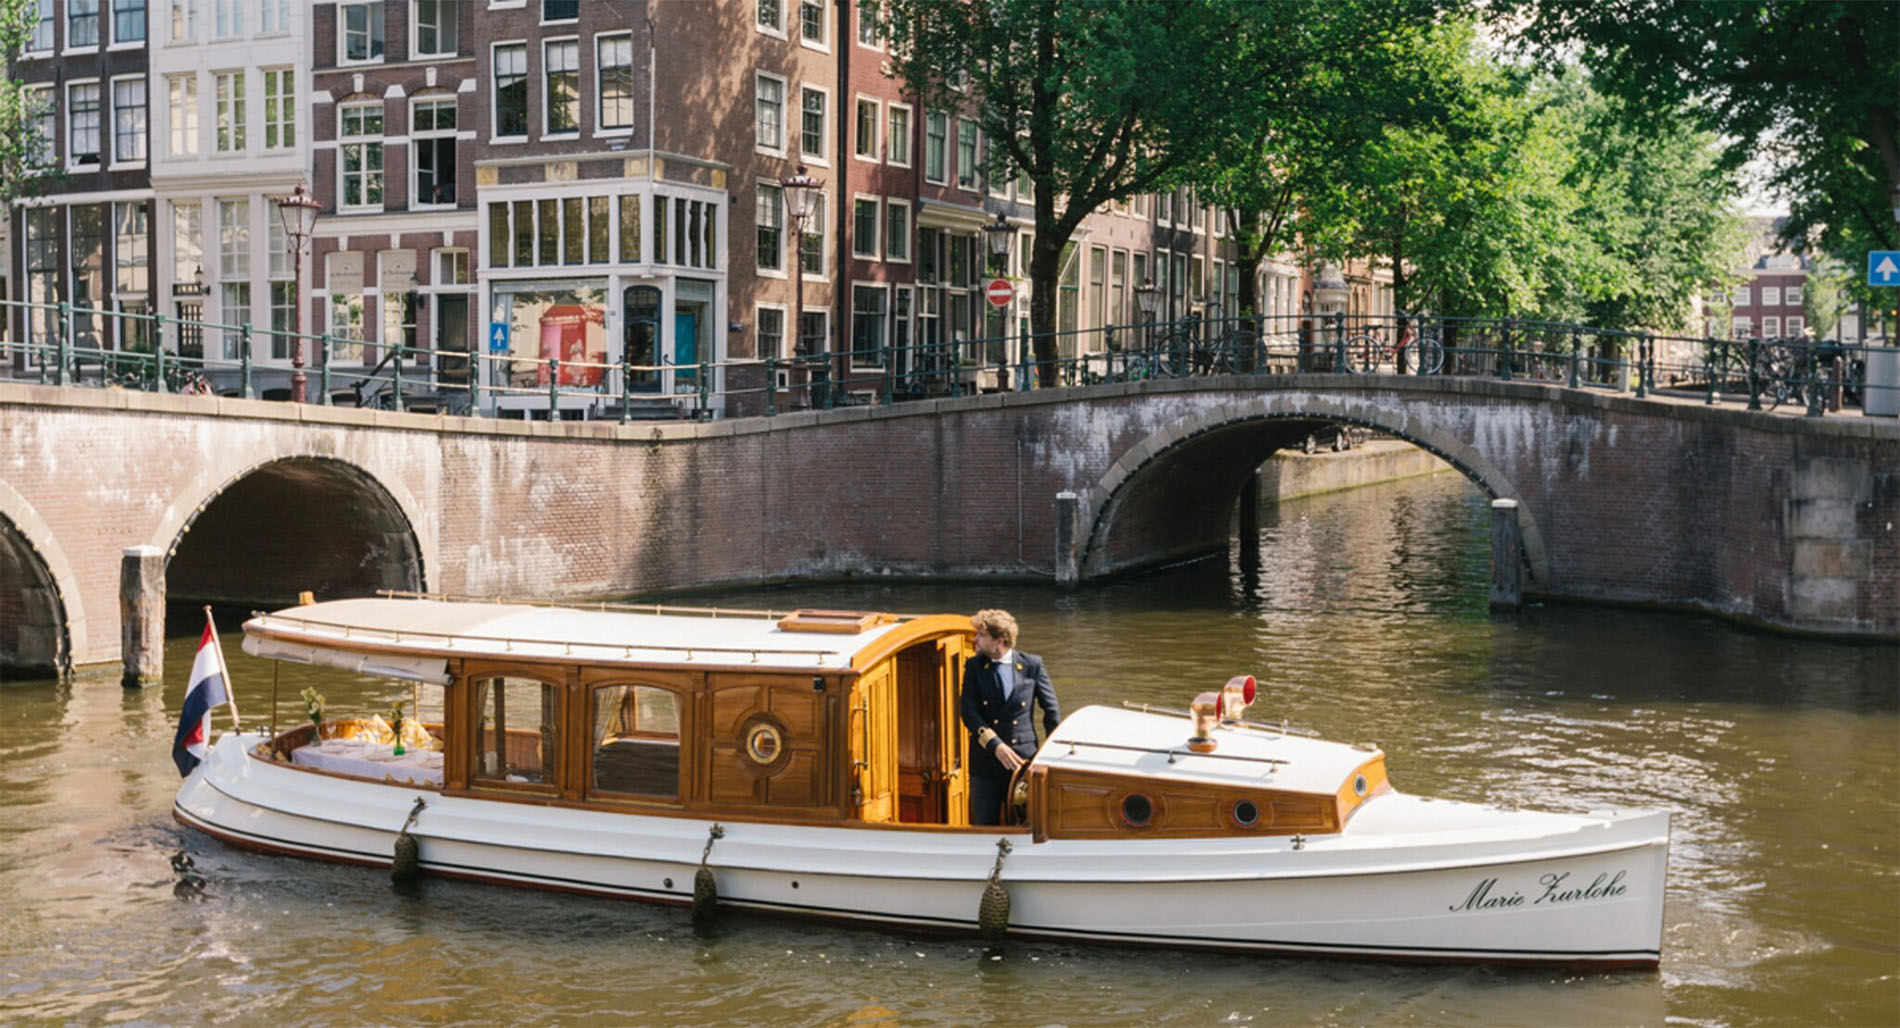 Marie Zurlohe - Amsterdam Boat Center